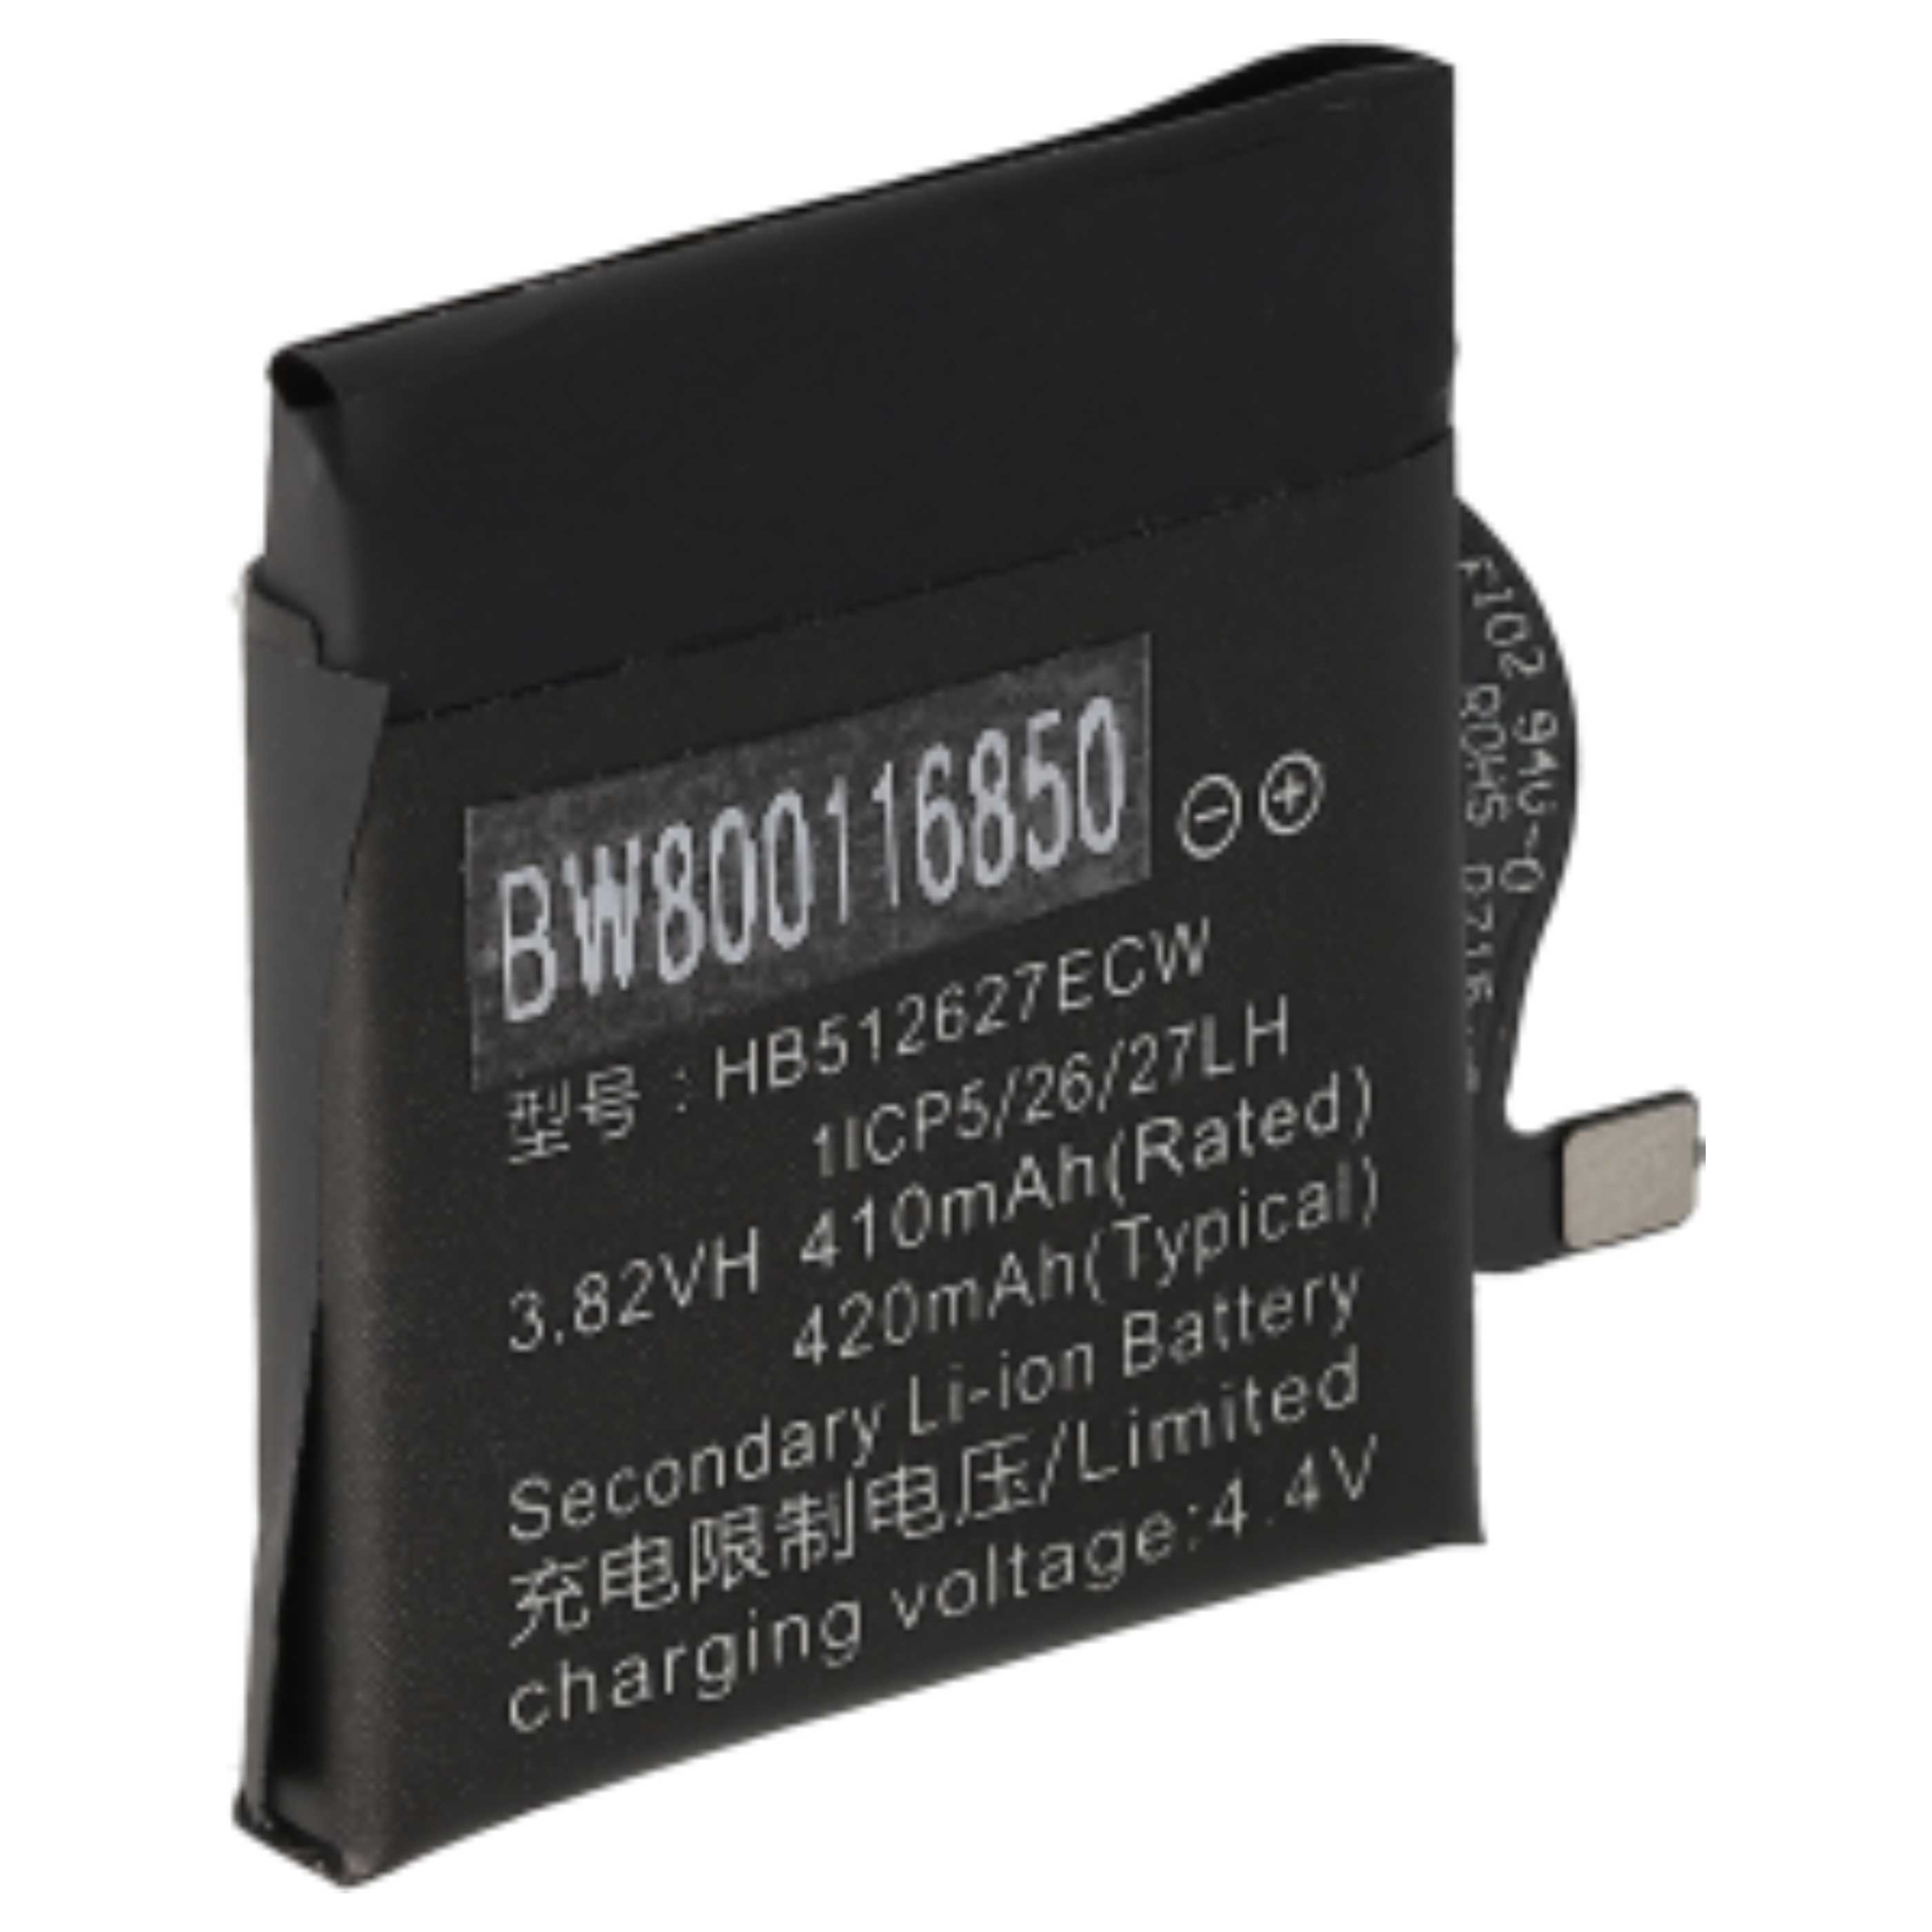 Smartwatch Battery Replacement for Huawei HB512627ECW - 410mAh 3.8V Li-polymer